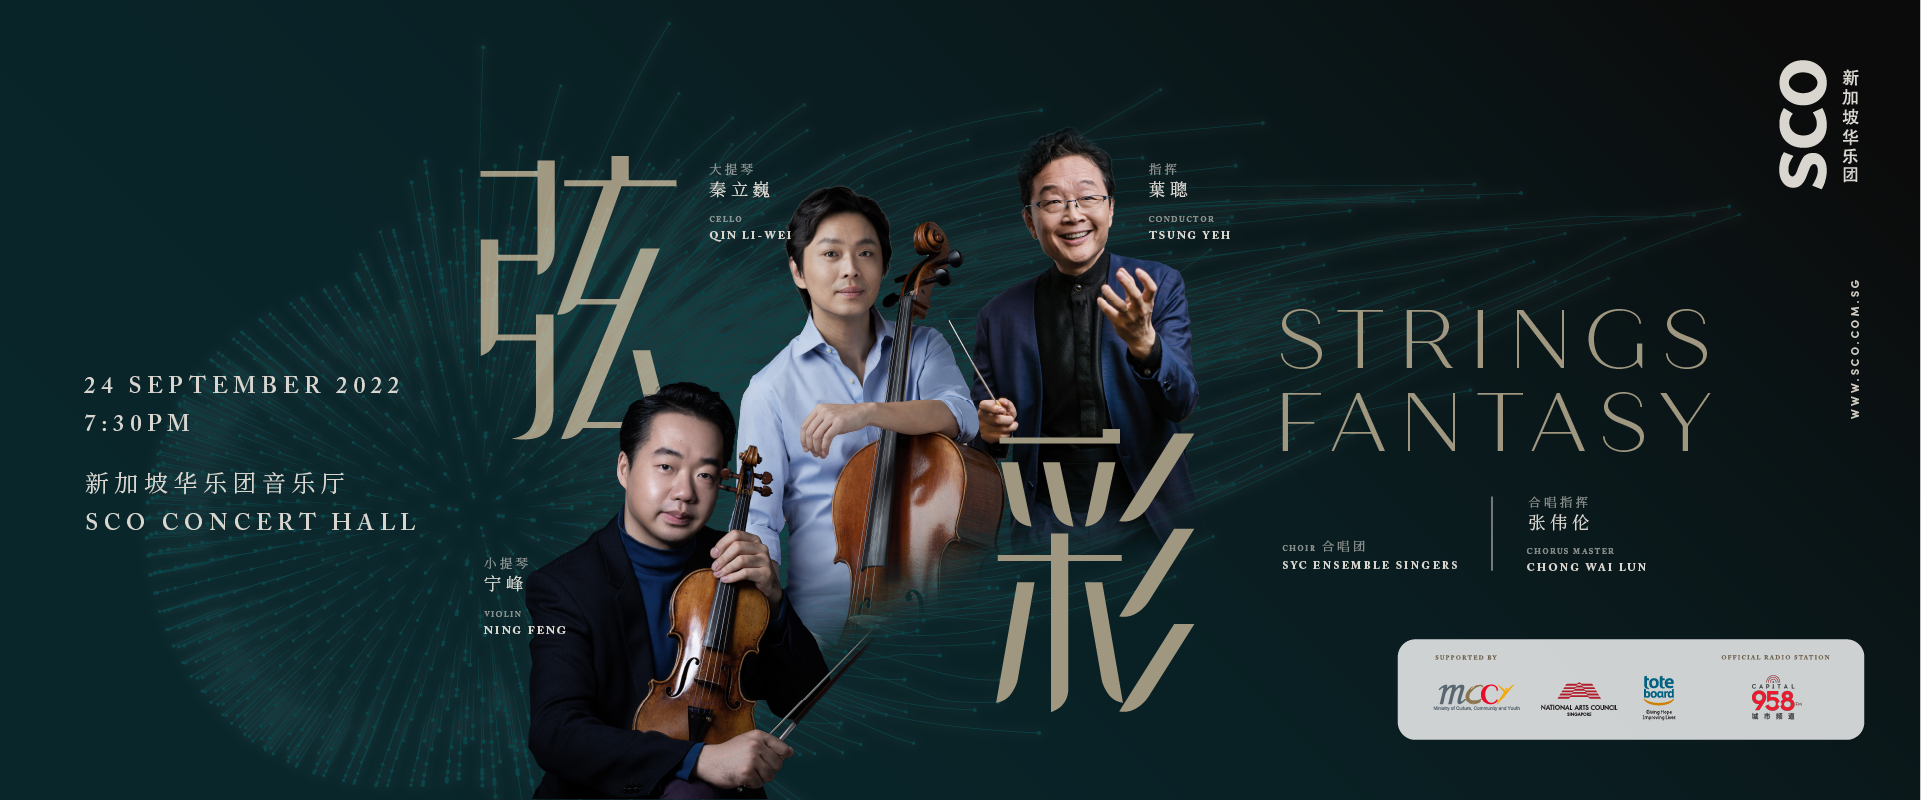 1920x800-homepagebanner Strings Fantasy 2022